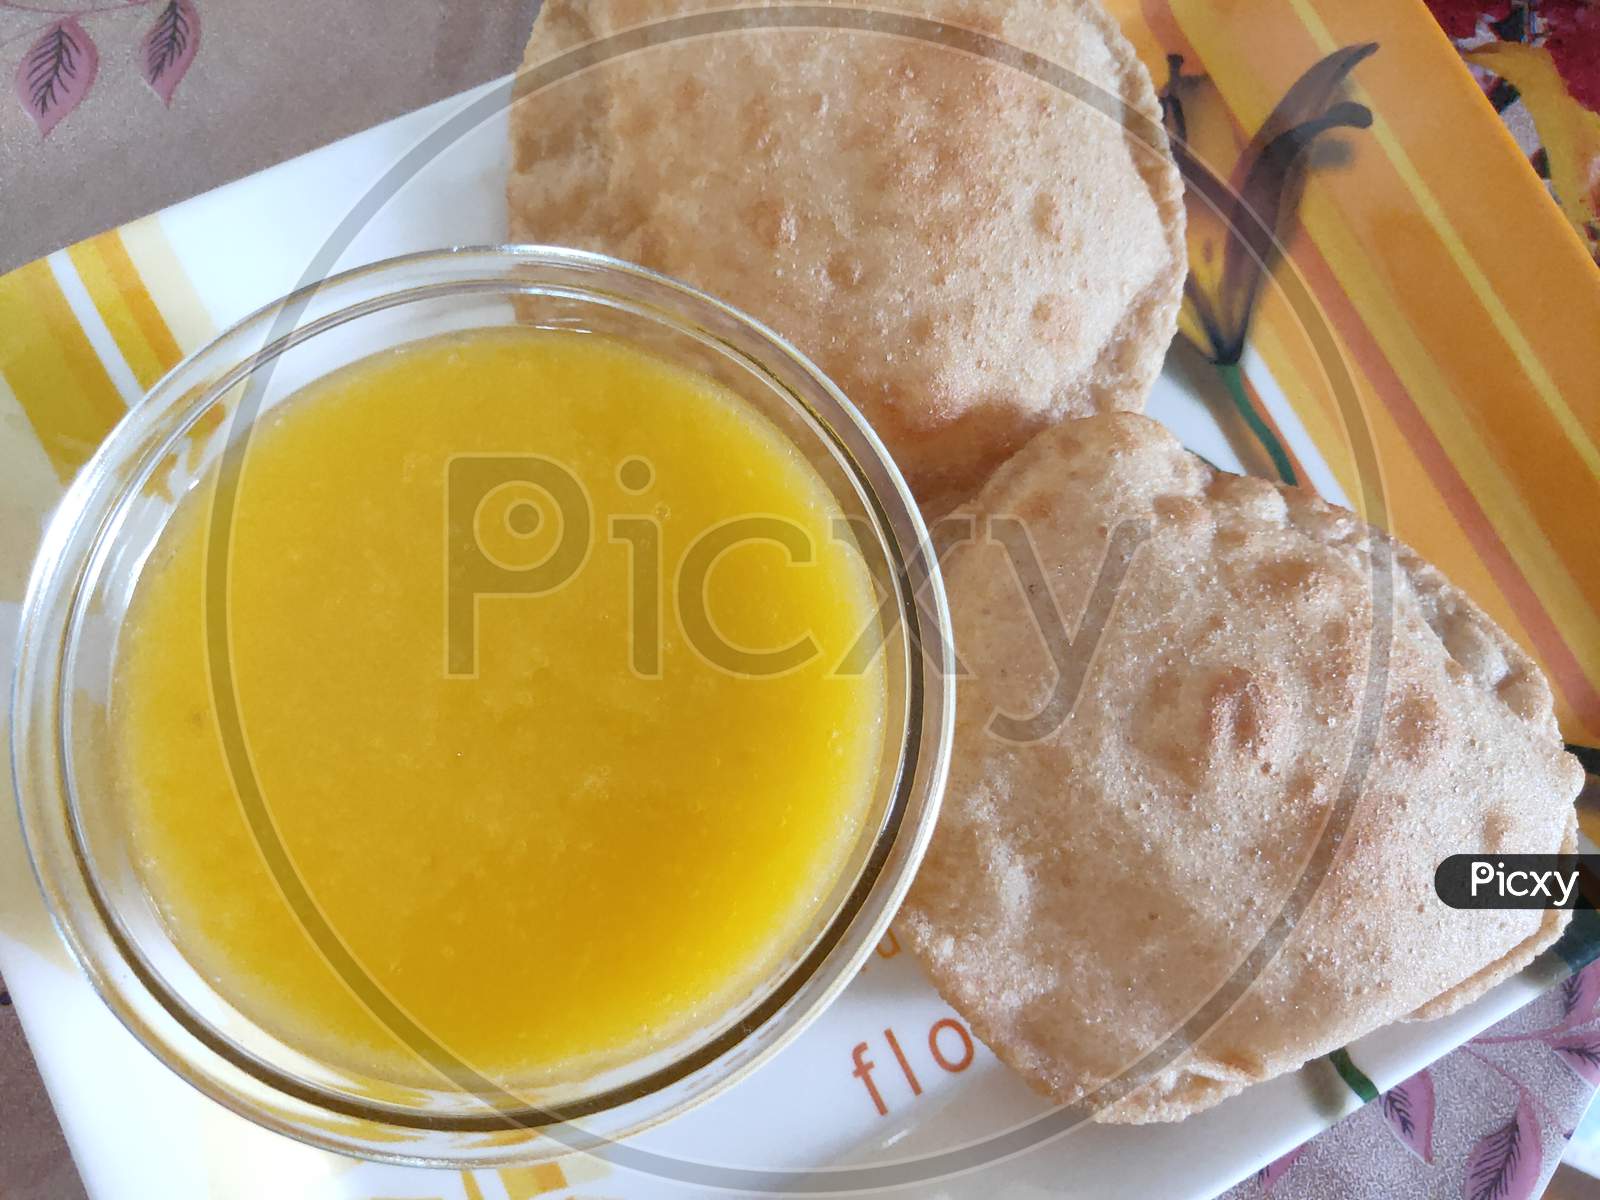 Mango juice and Puri dish. Poori and mango juice in a plate.